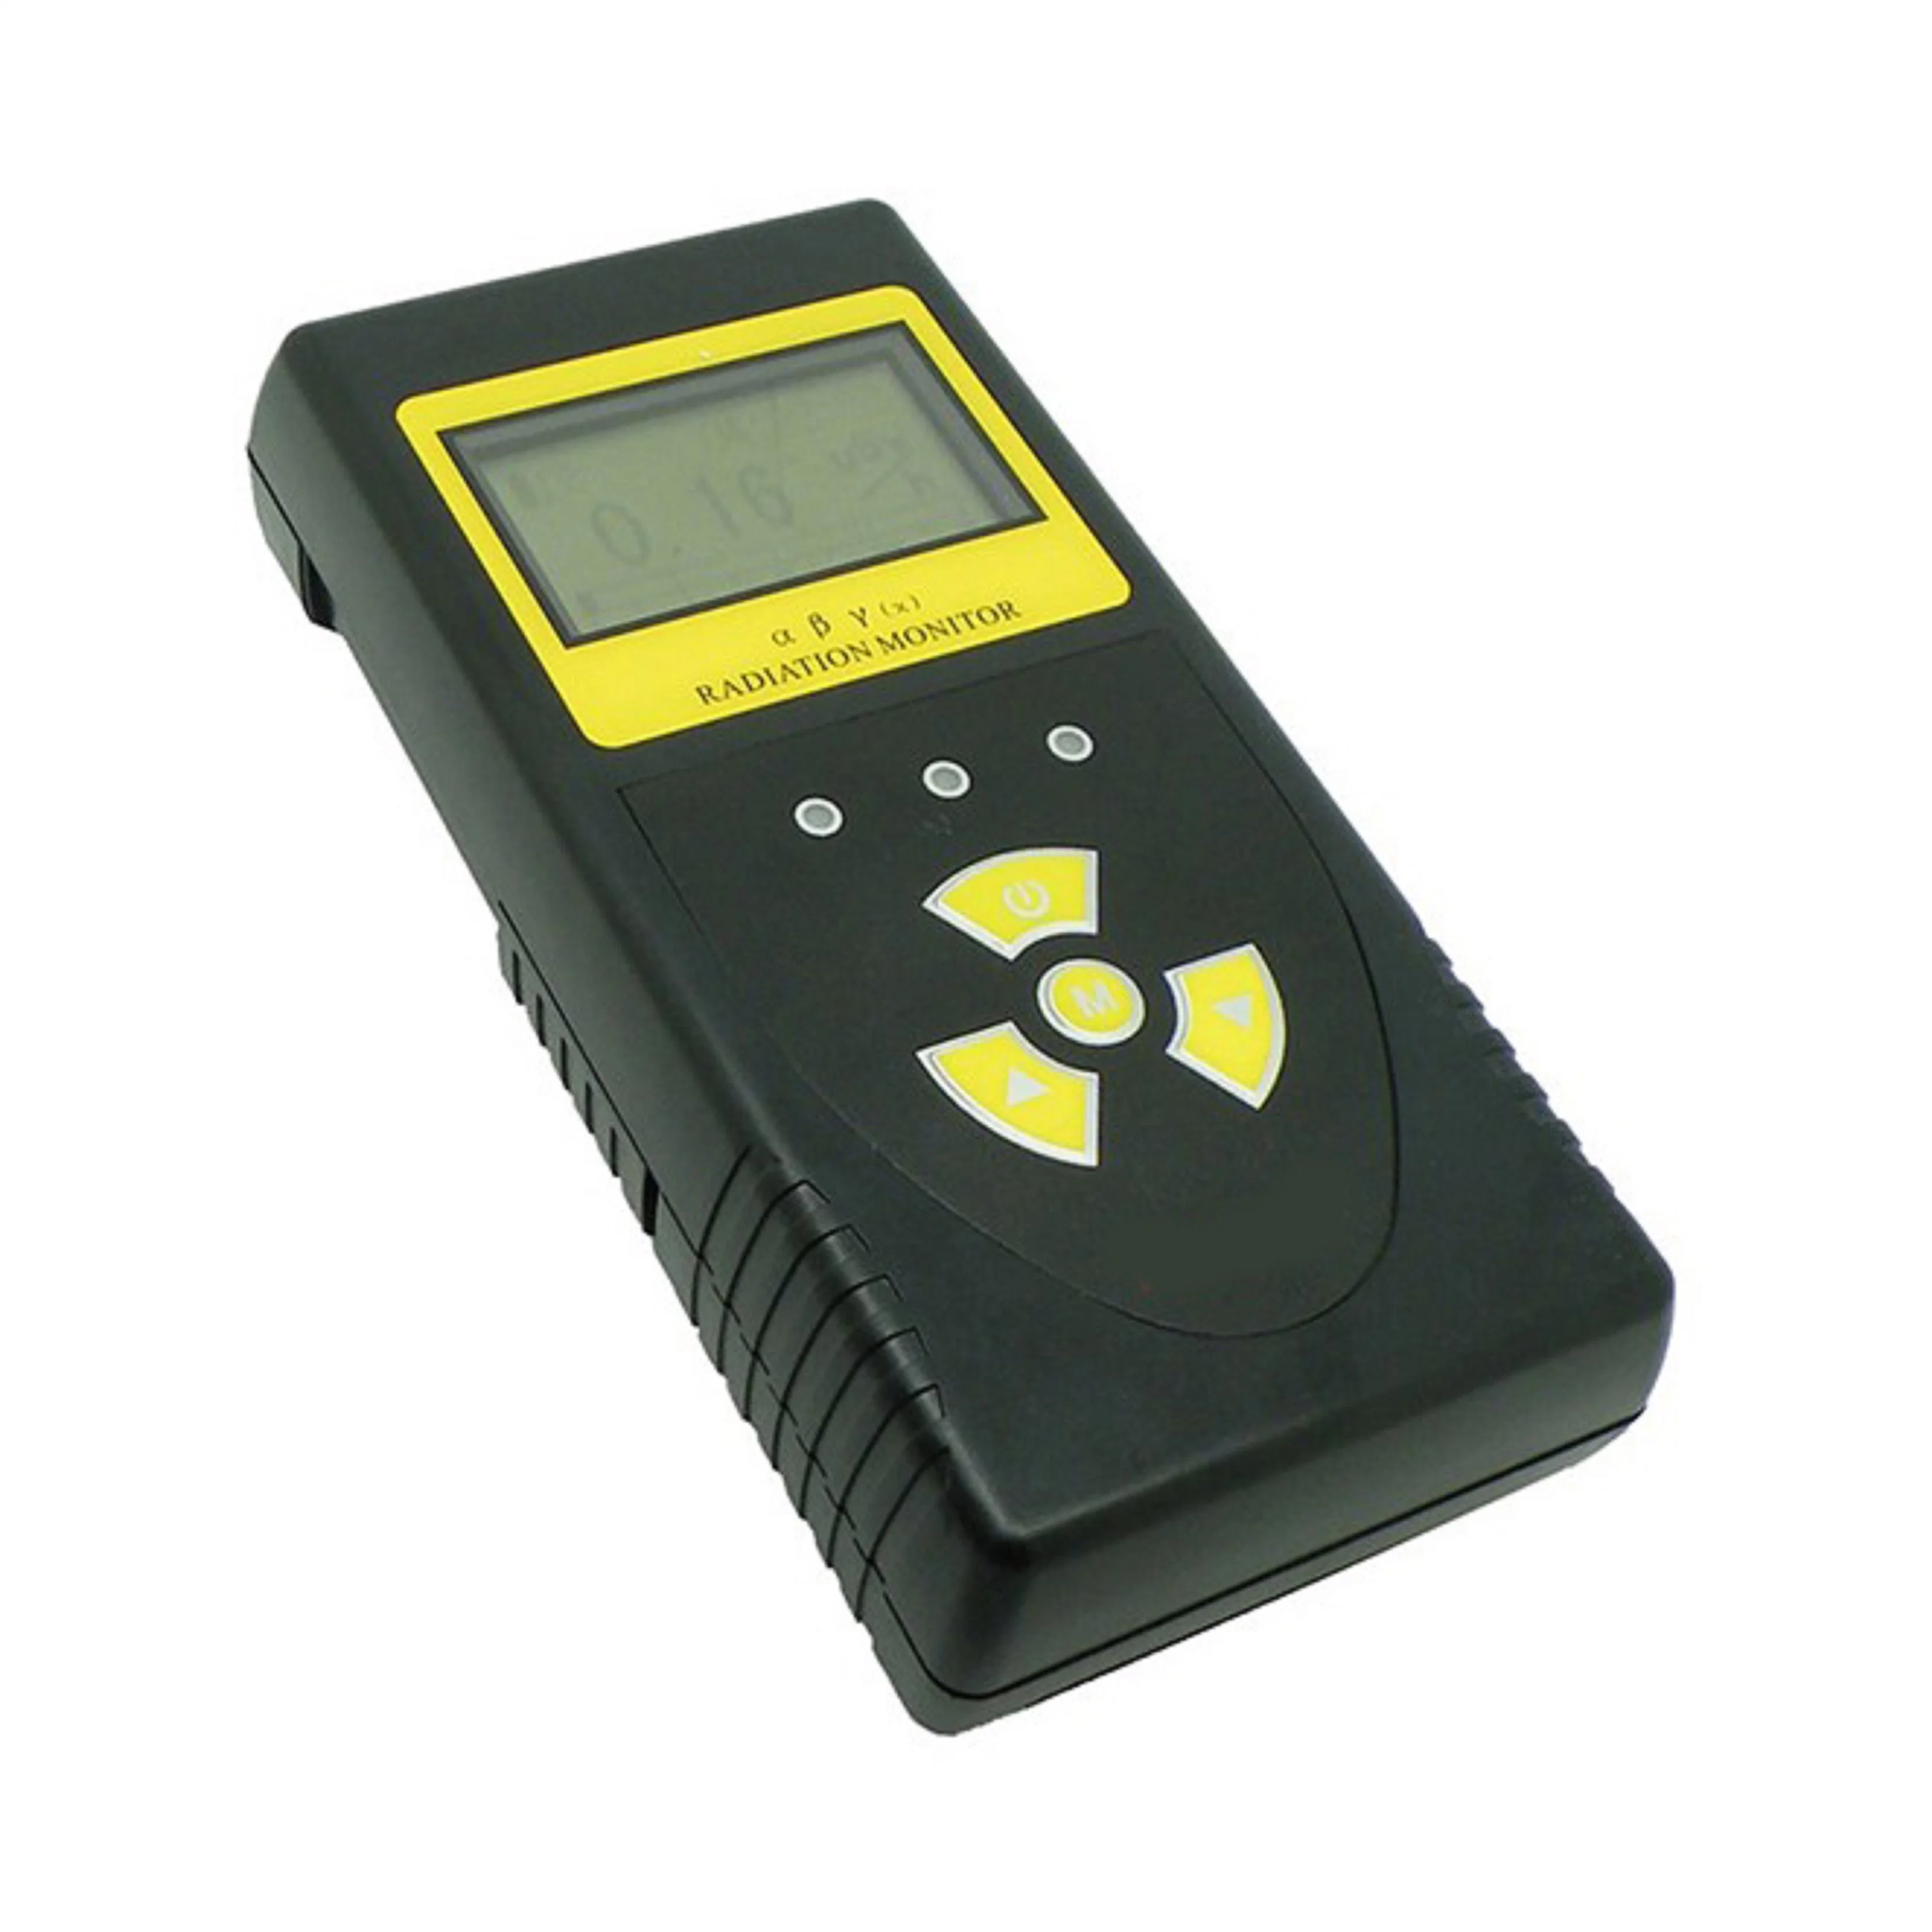 Nt6108 Pocket Radiation Dosimeter